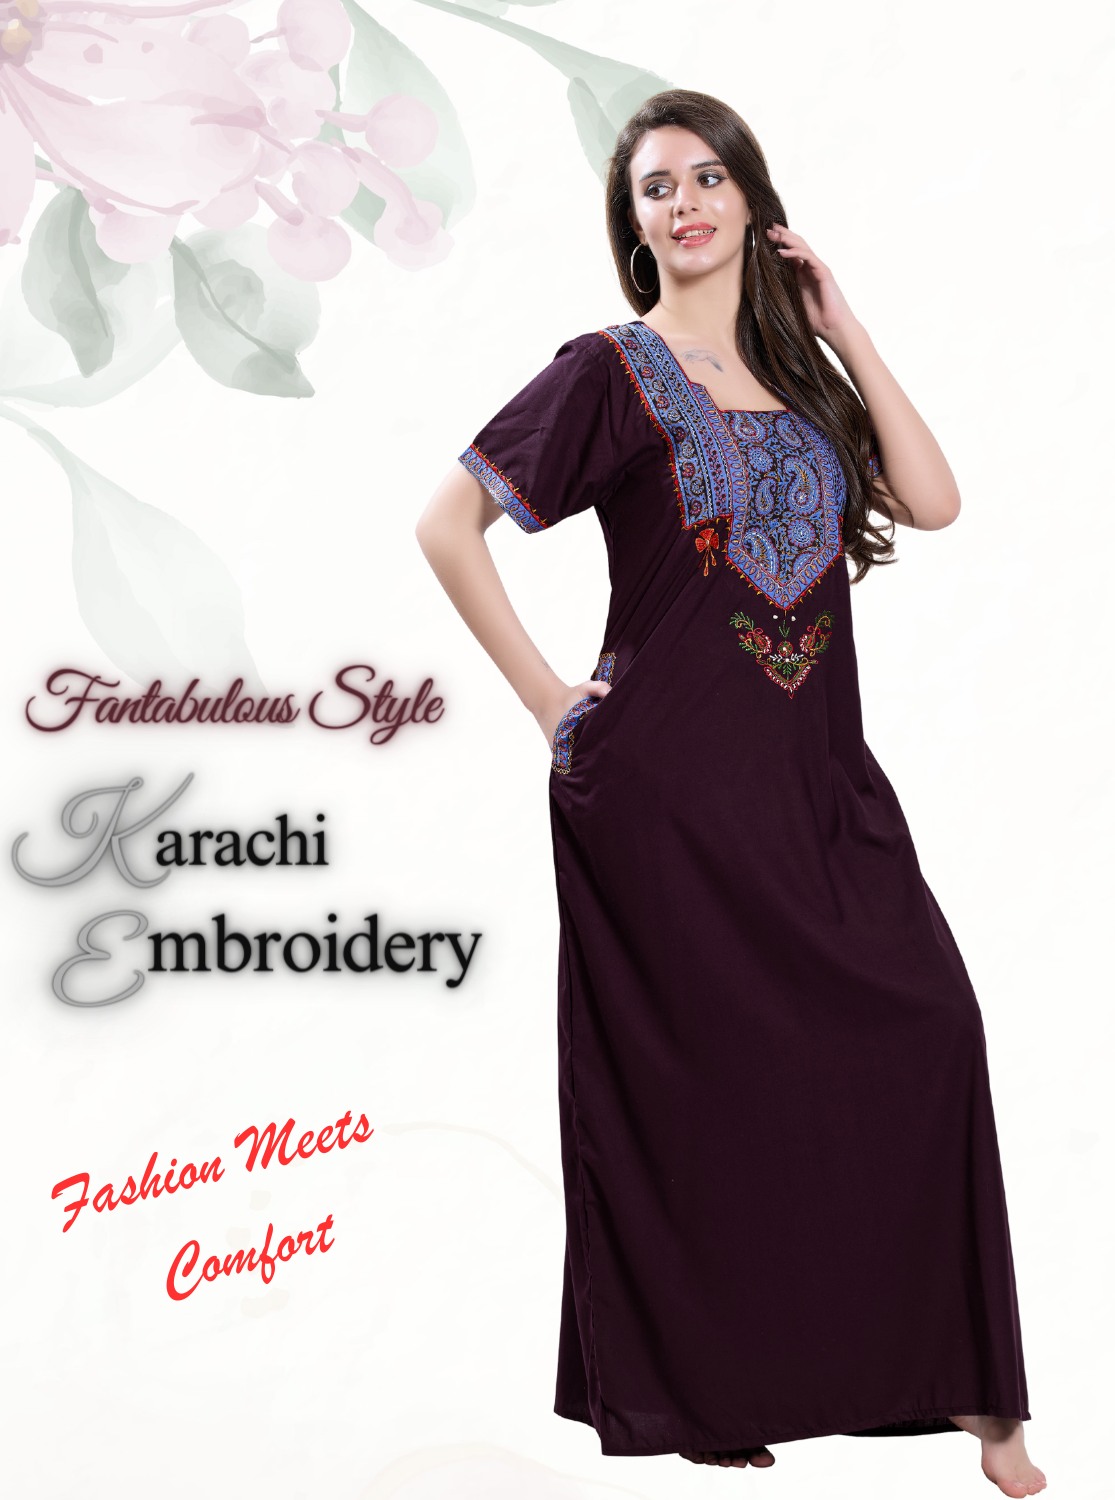 MANGAI Premium KARACHI Embroidery Nighties | Beautiful Embroidery Design's | Branded Quality | Half Sleeve | Regular Model | Stylish Nightdress for Women